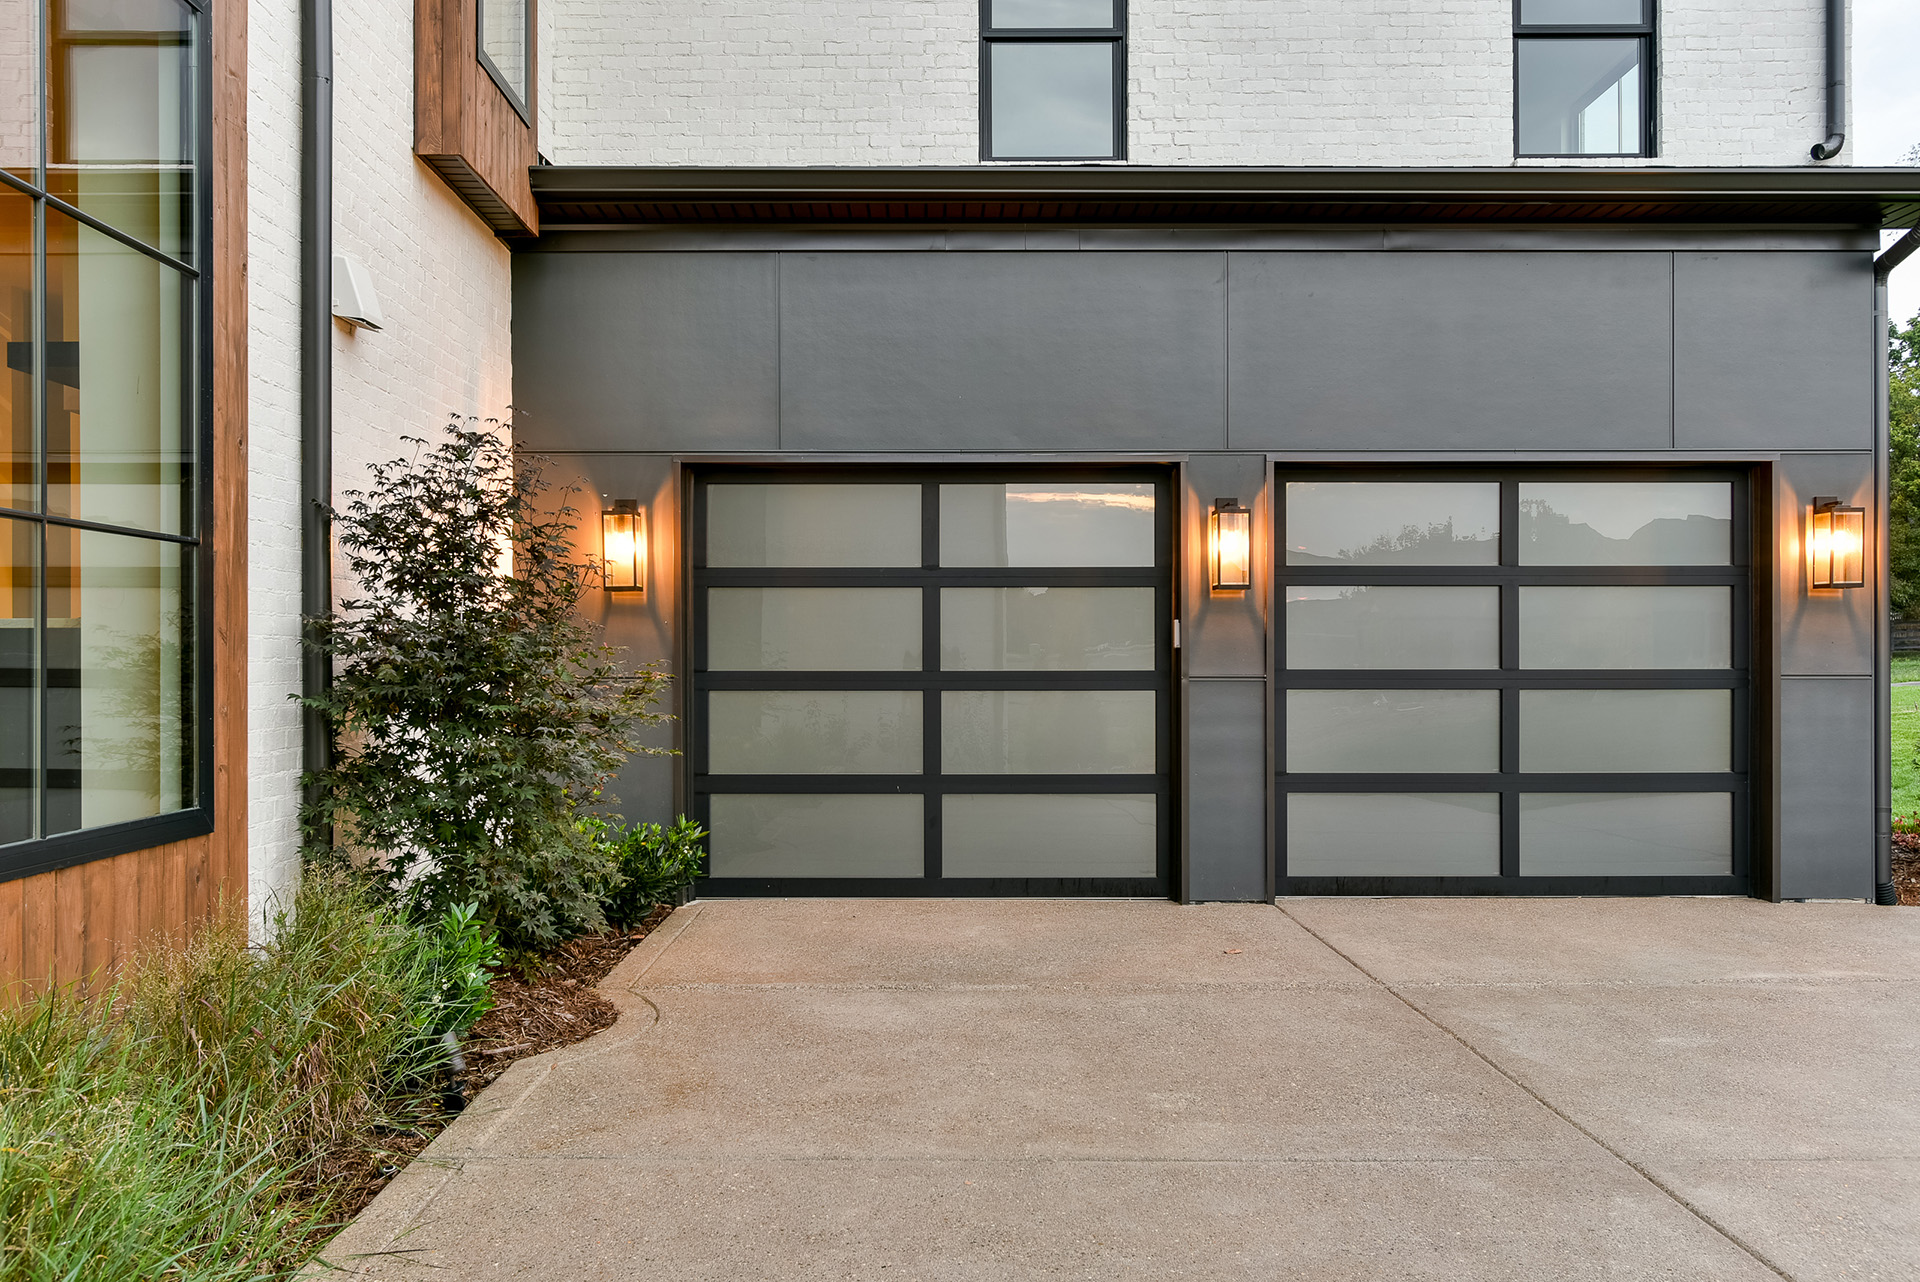 Home Builders Use Glass Garage Doors To, Modern Glass Garage Doors Reviews